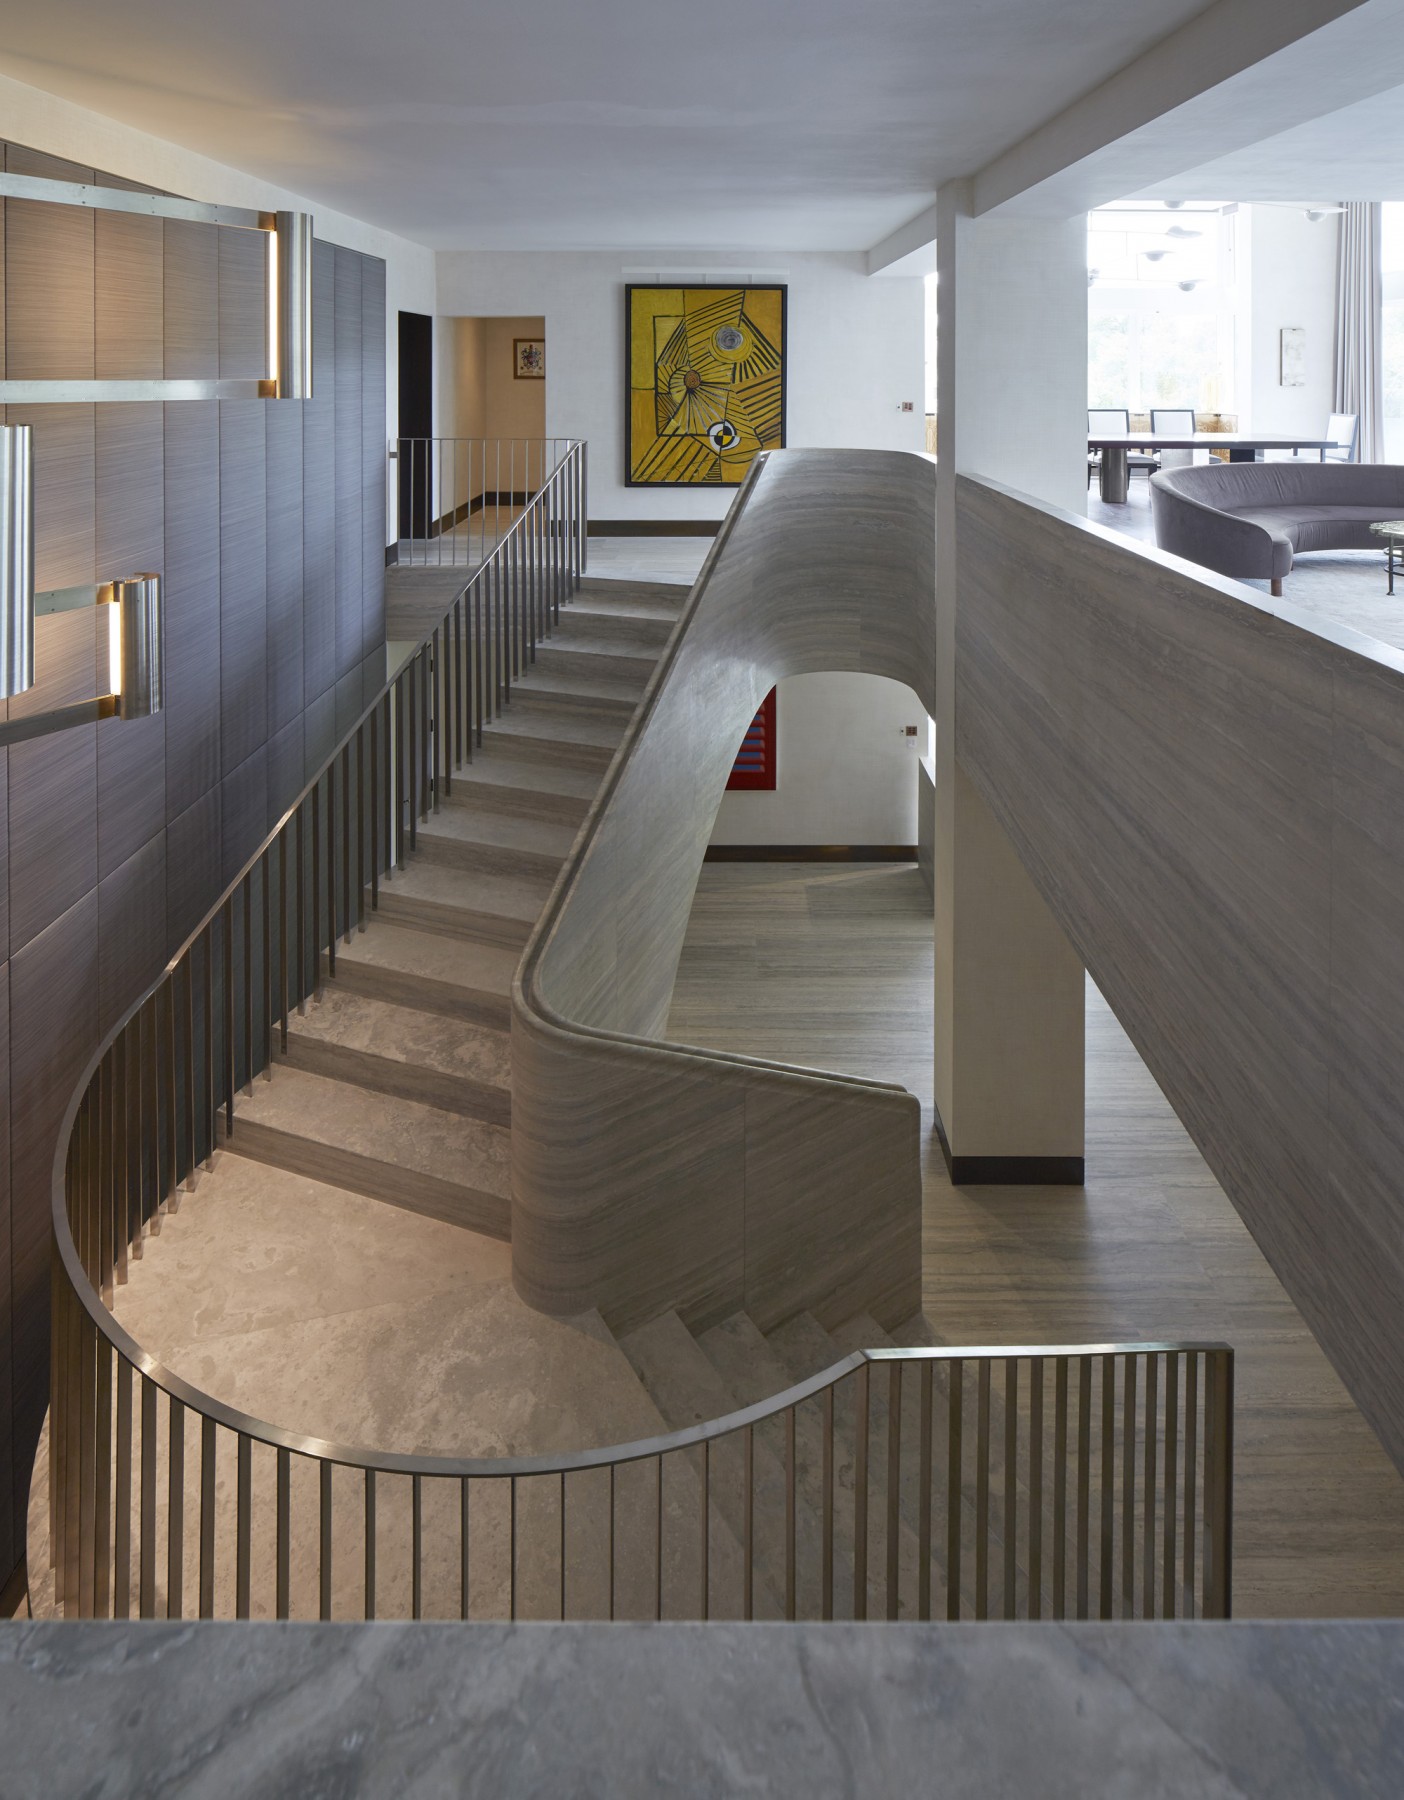 Jamie-Fobert-Architects- Travertine-stair-central-London-duplex-luxury-apartment- elegant-stone-stair